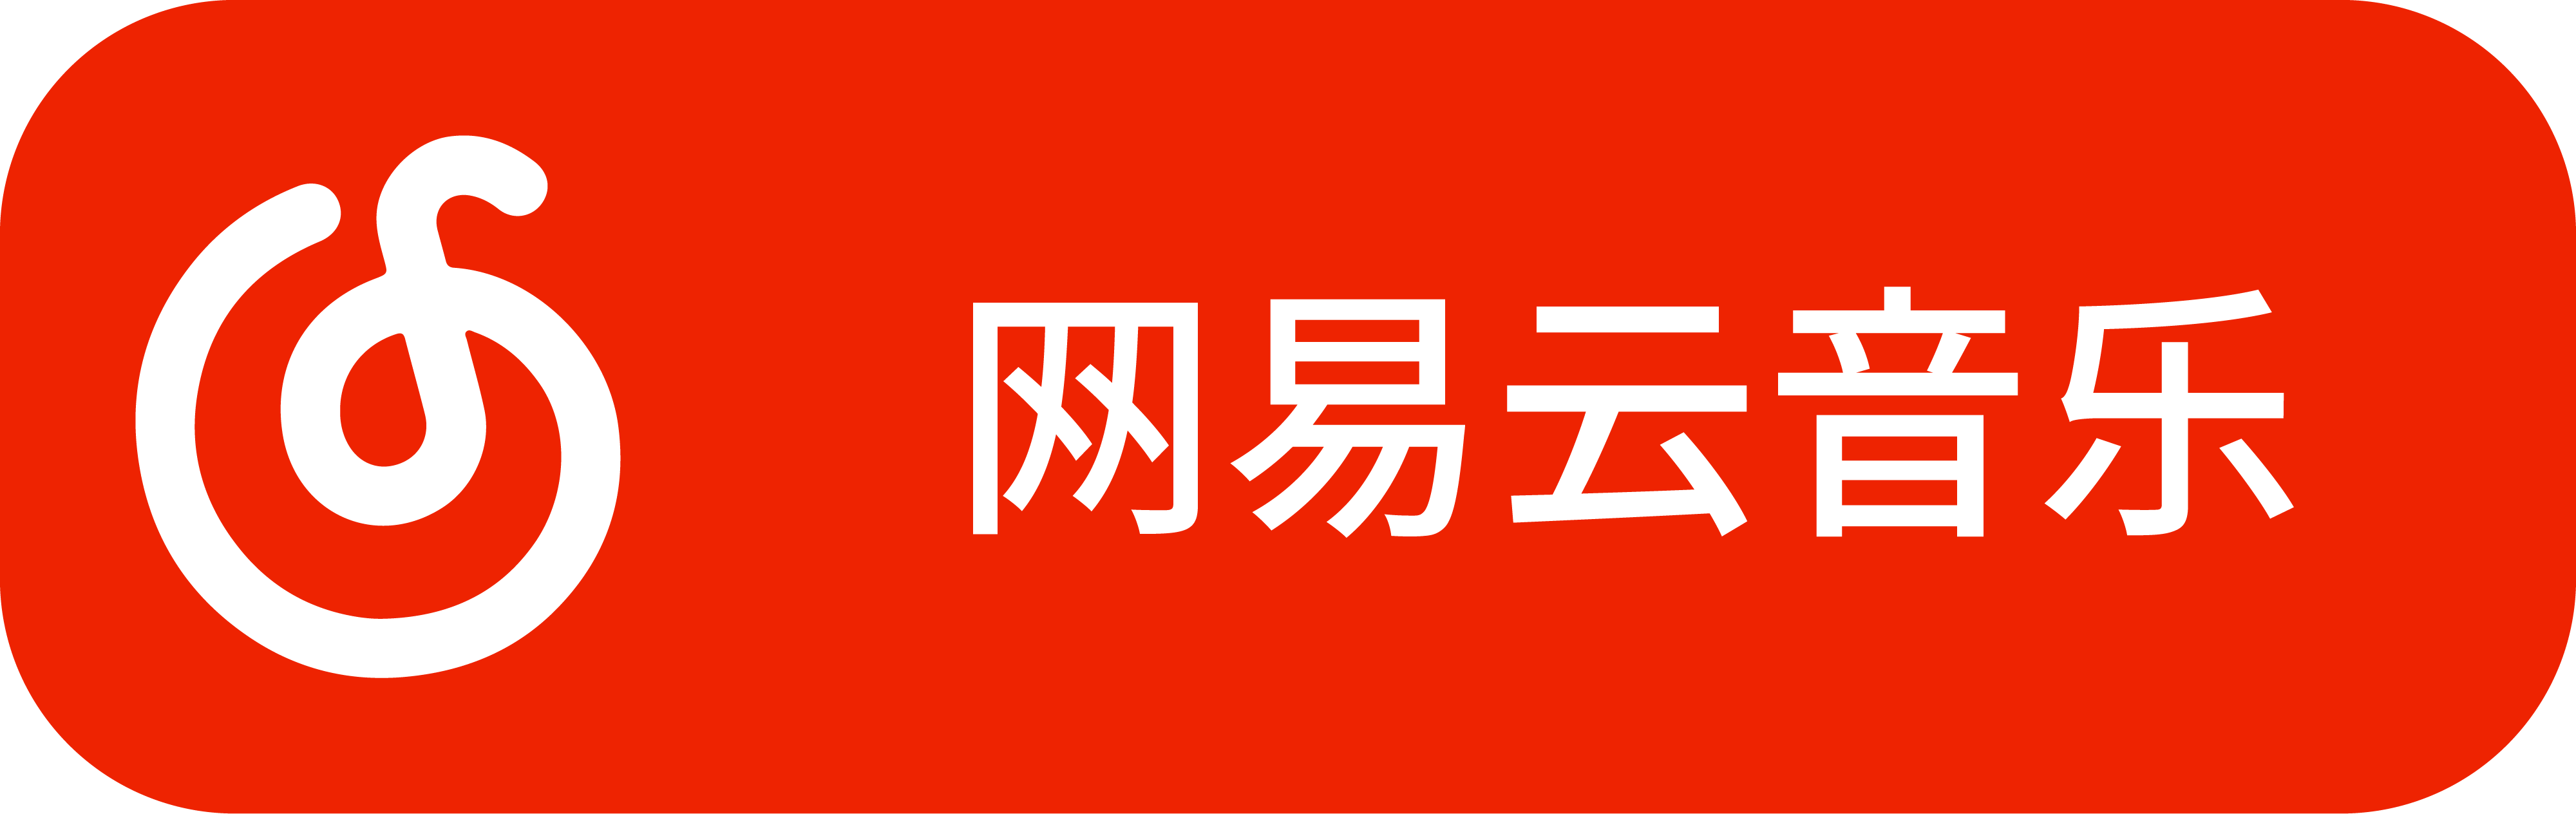 NetEase Music_网易云音乐_ON AIR by CTON